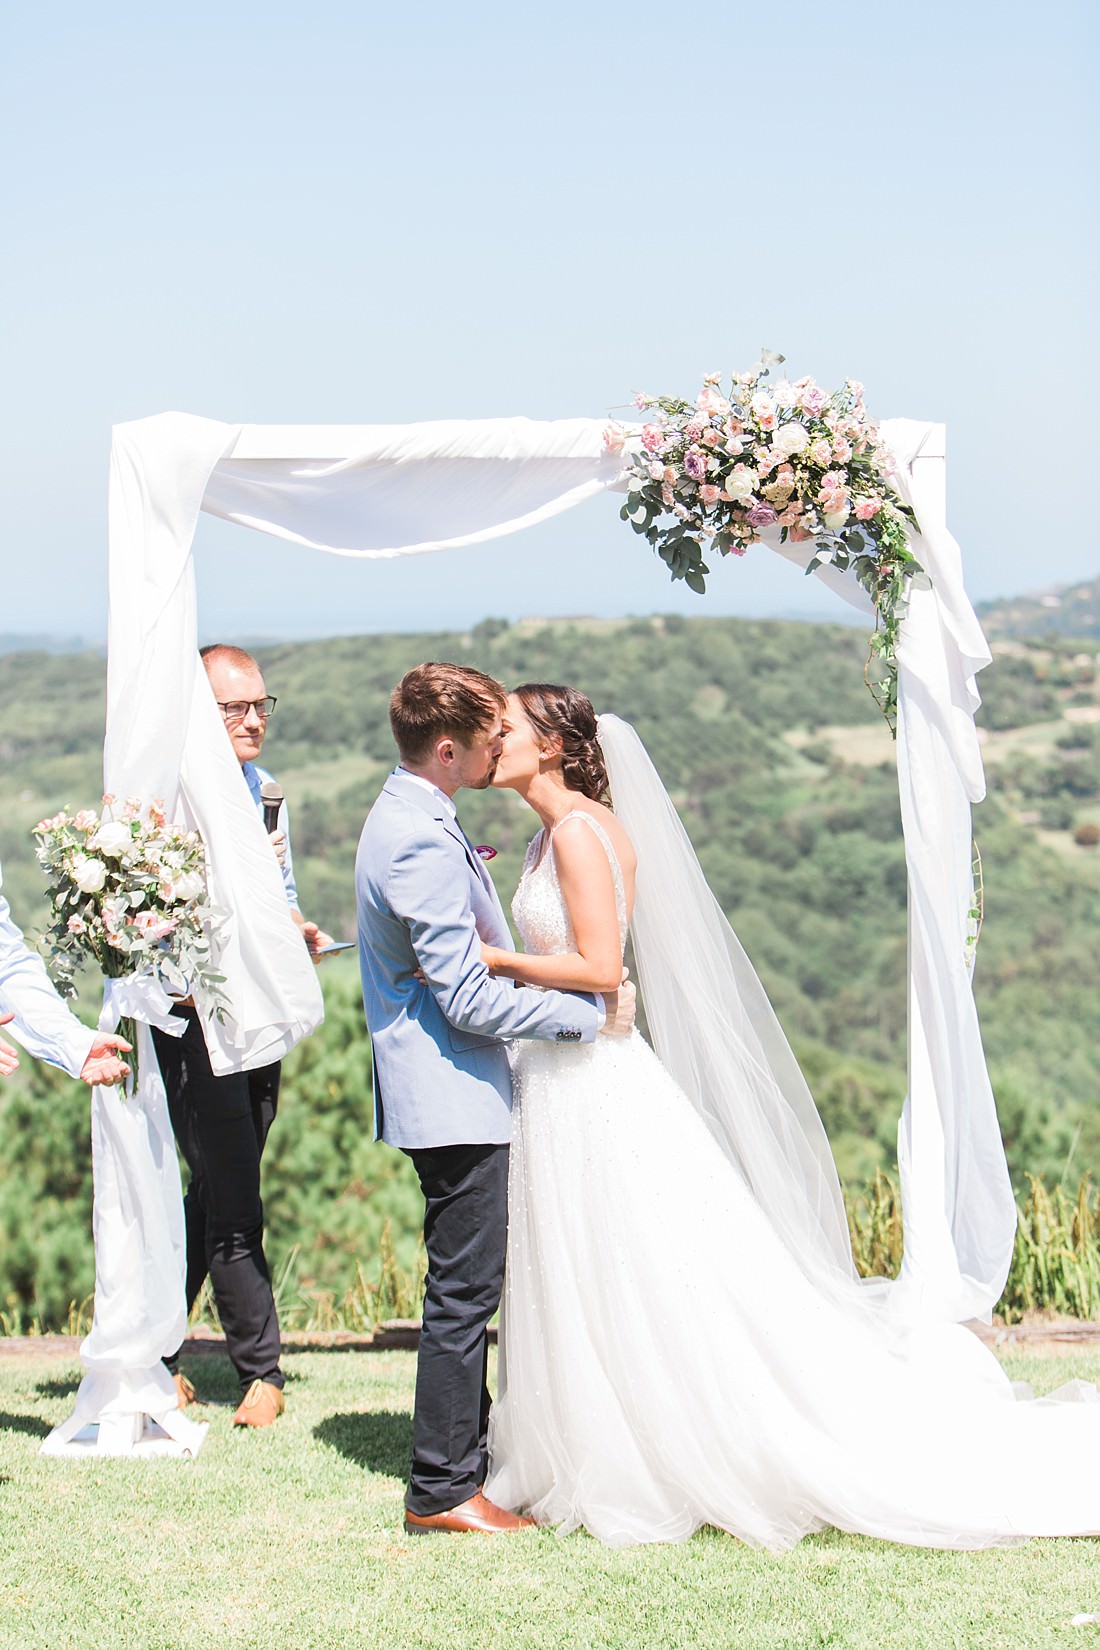 Summergrove Estate Wedding by Mario Colli Photography